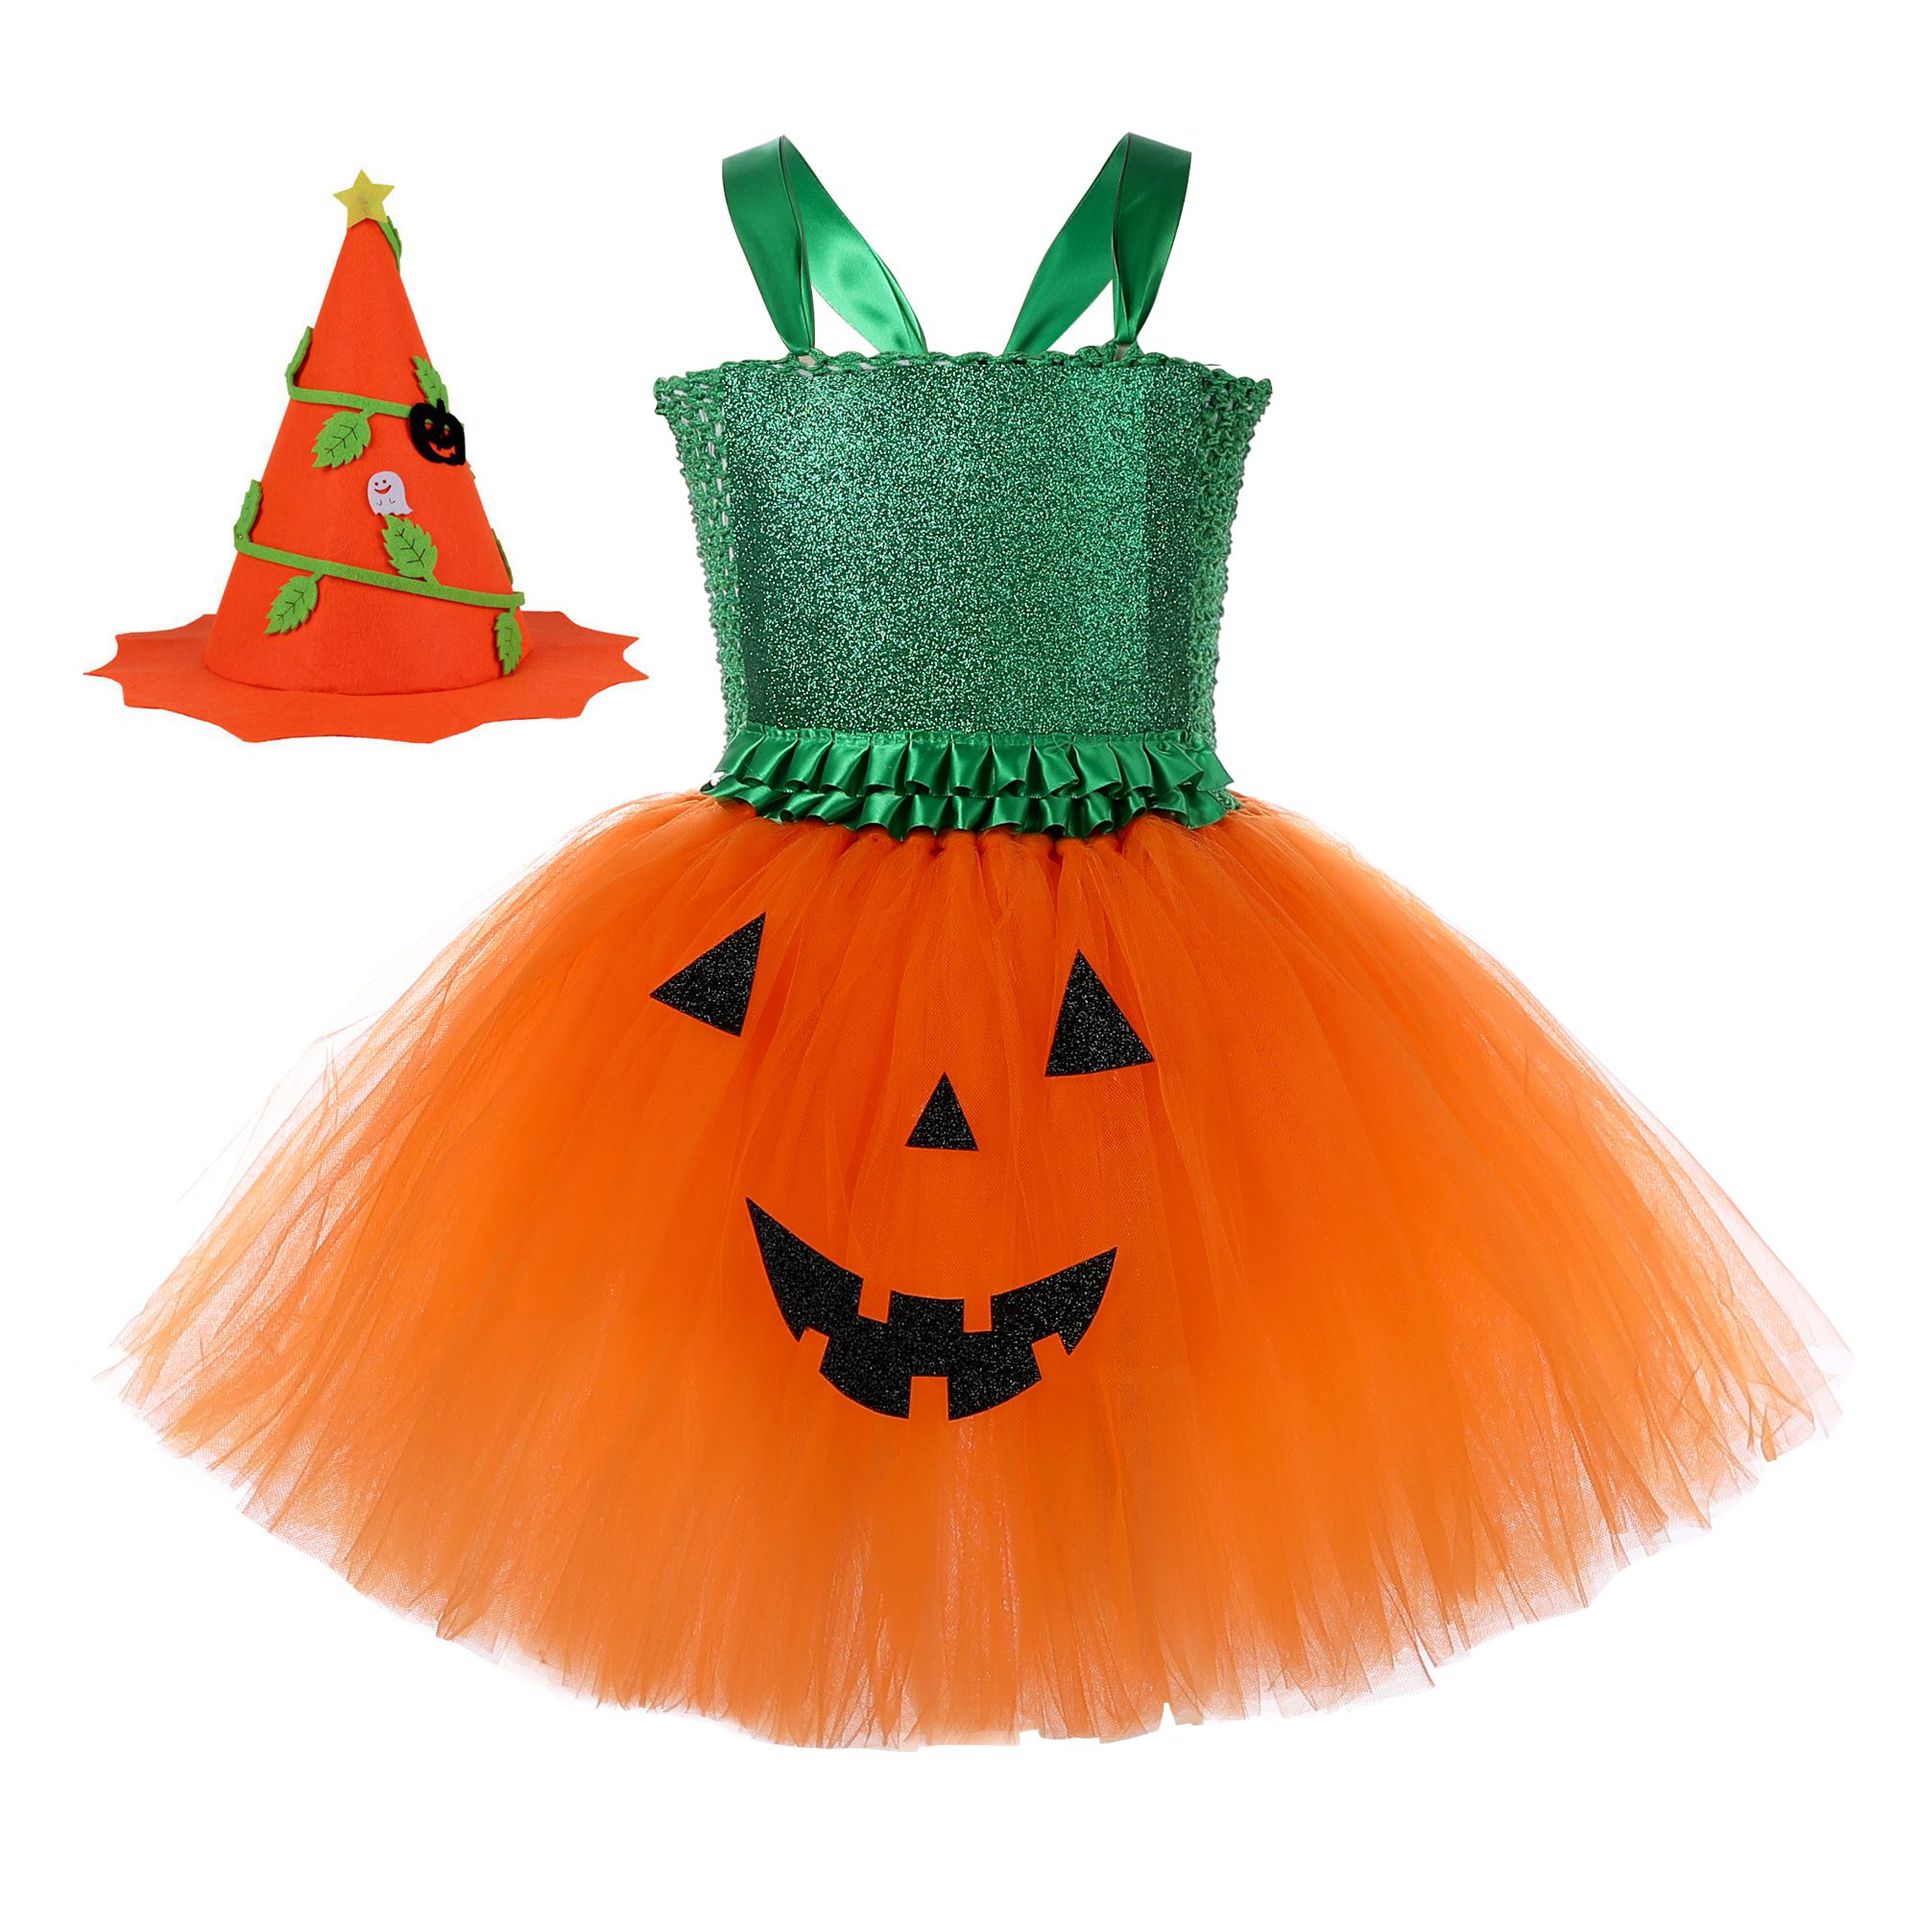 Pumpkin Princess Tutu Dress Halloween Outfits Cosplay Costume Kids